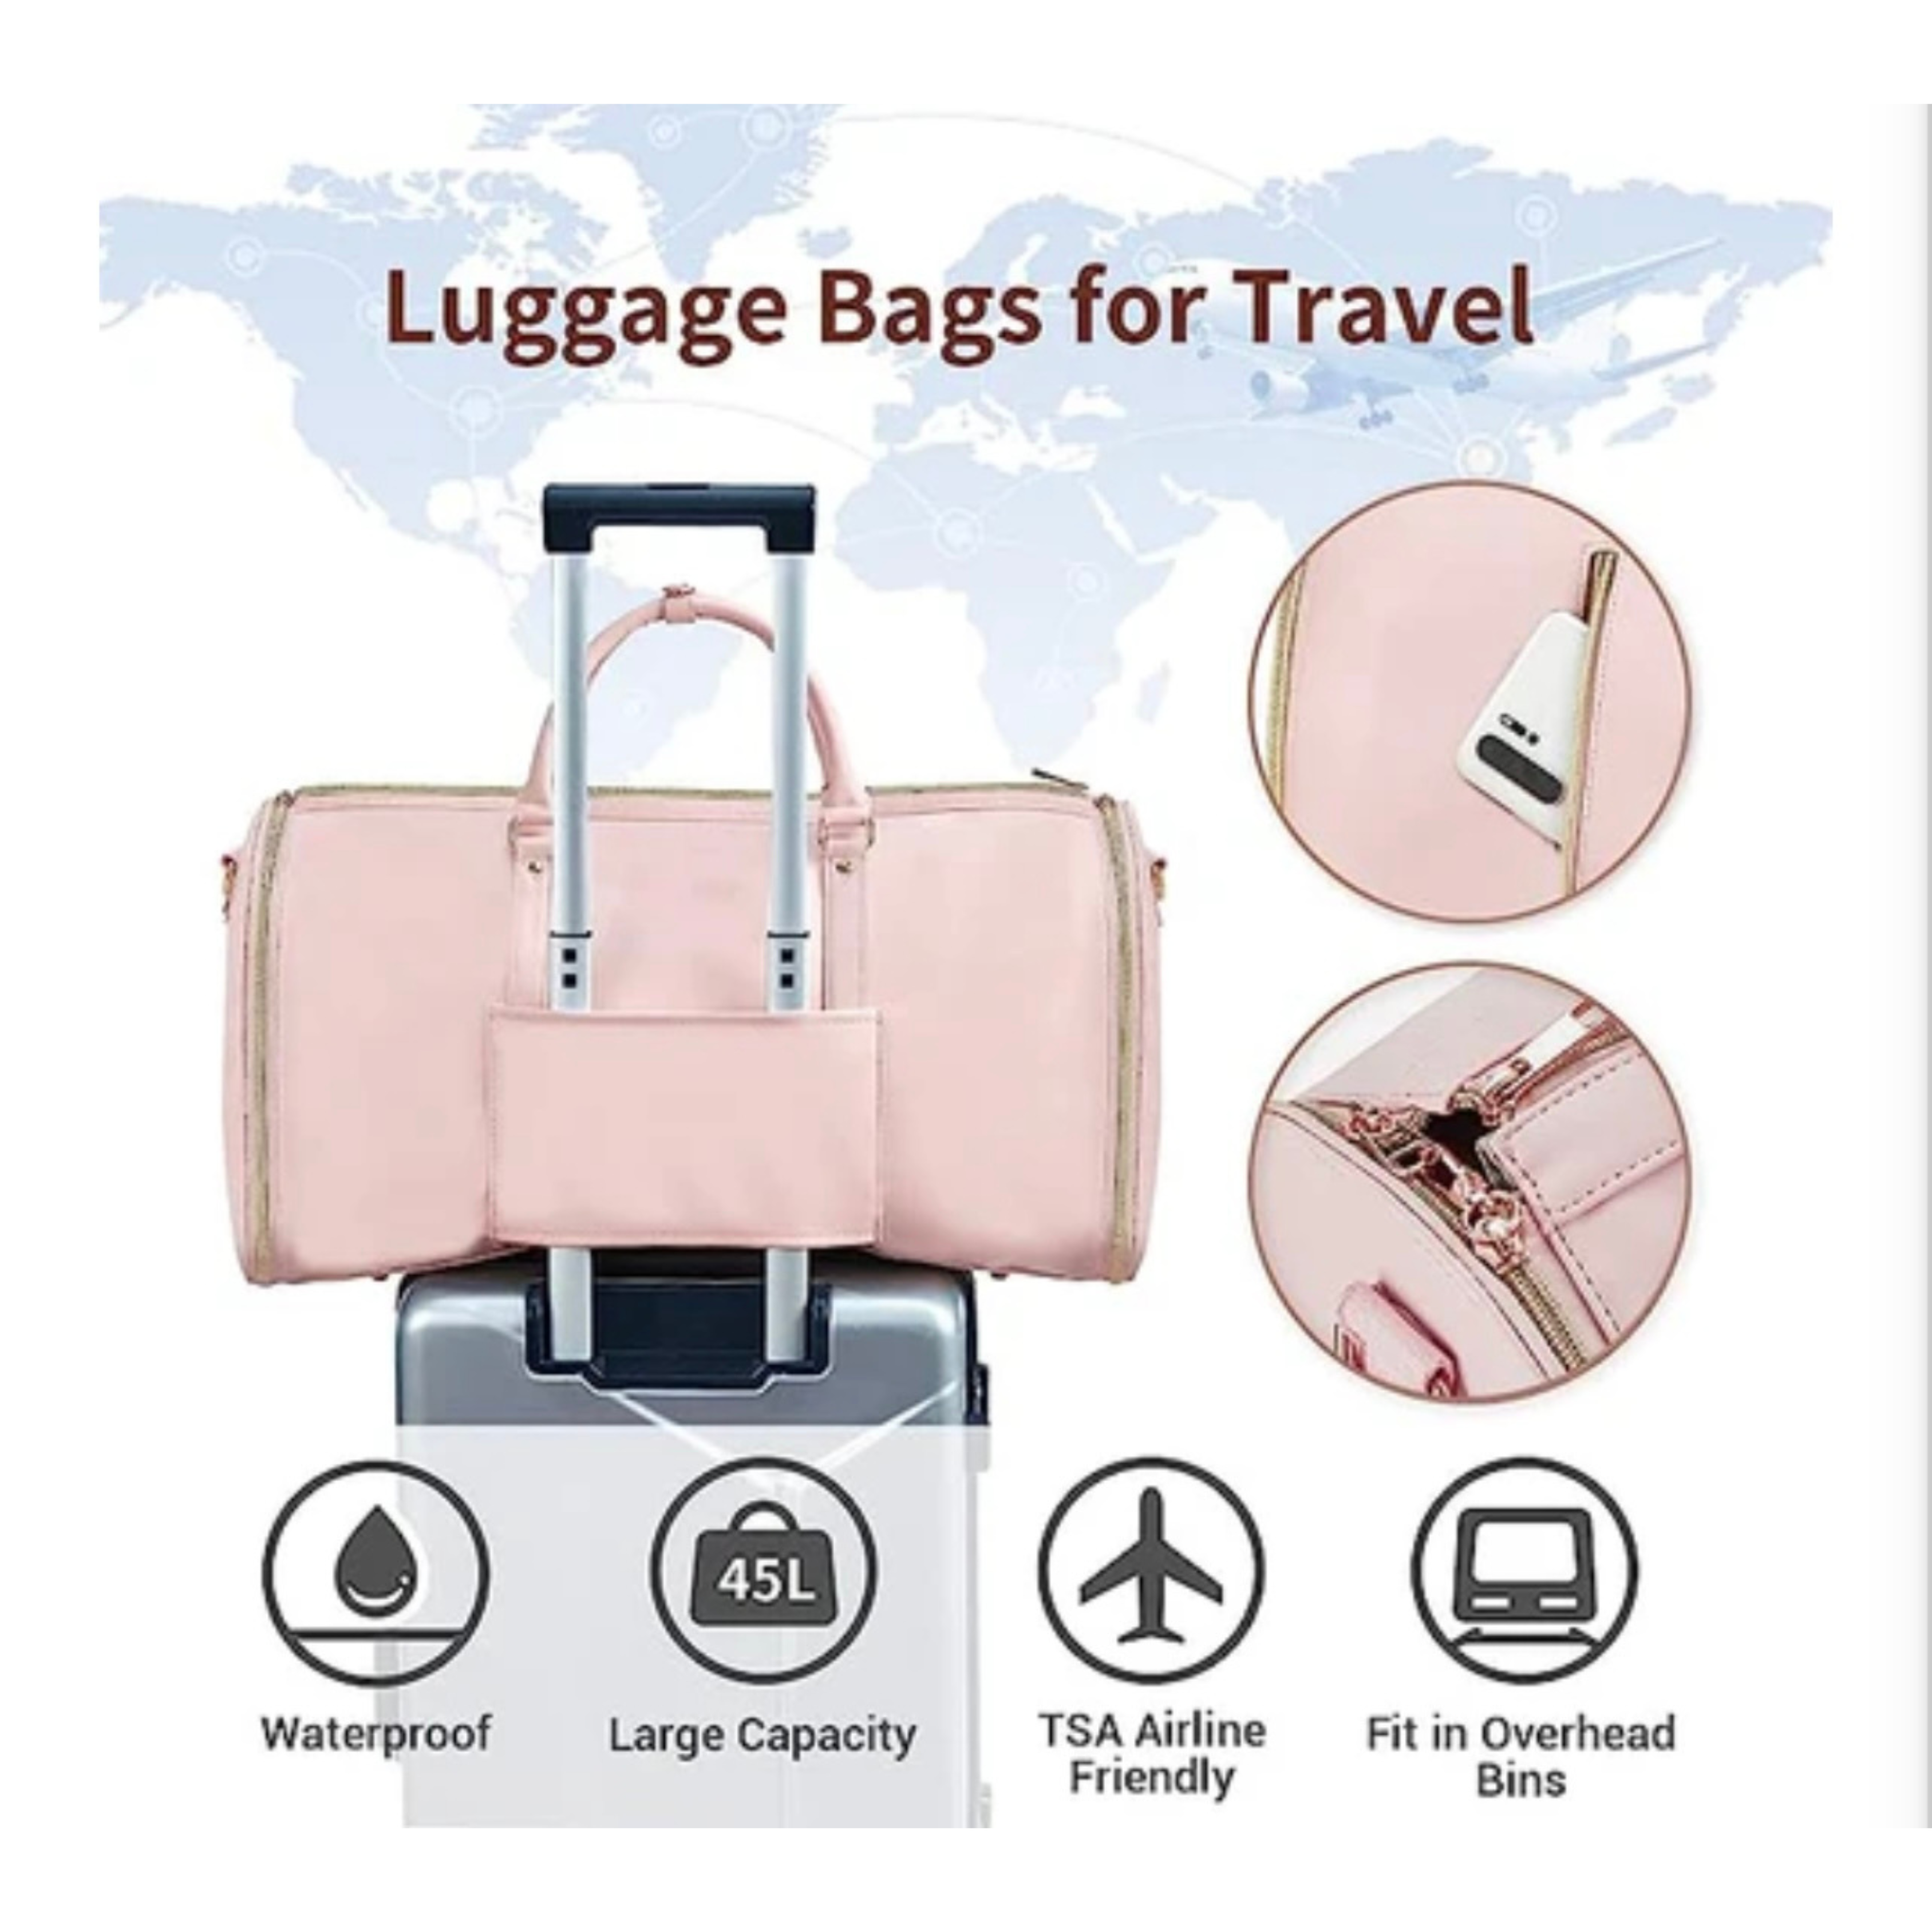 Travelneasy - The Perfect Travel Bag